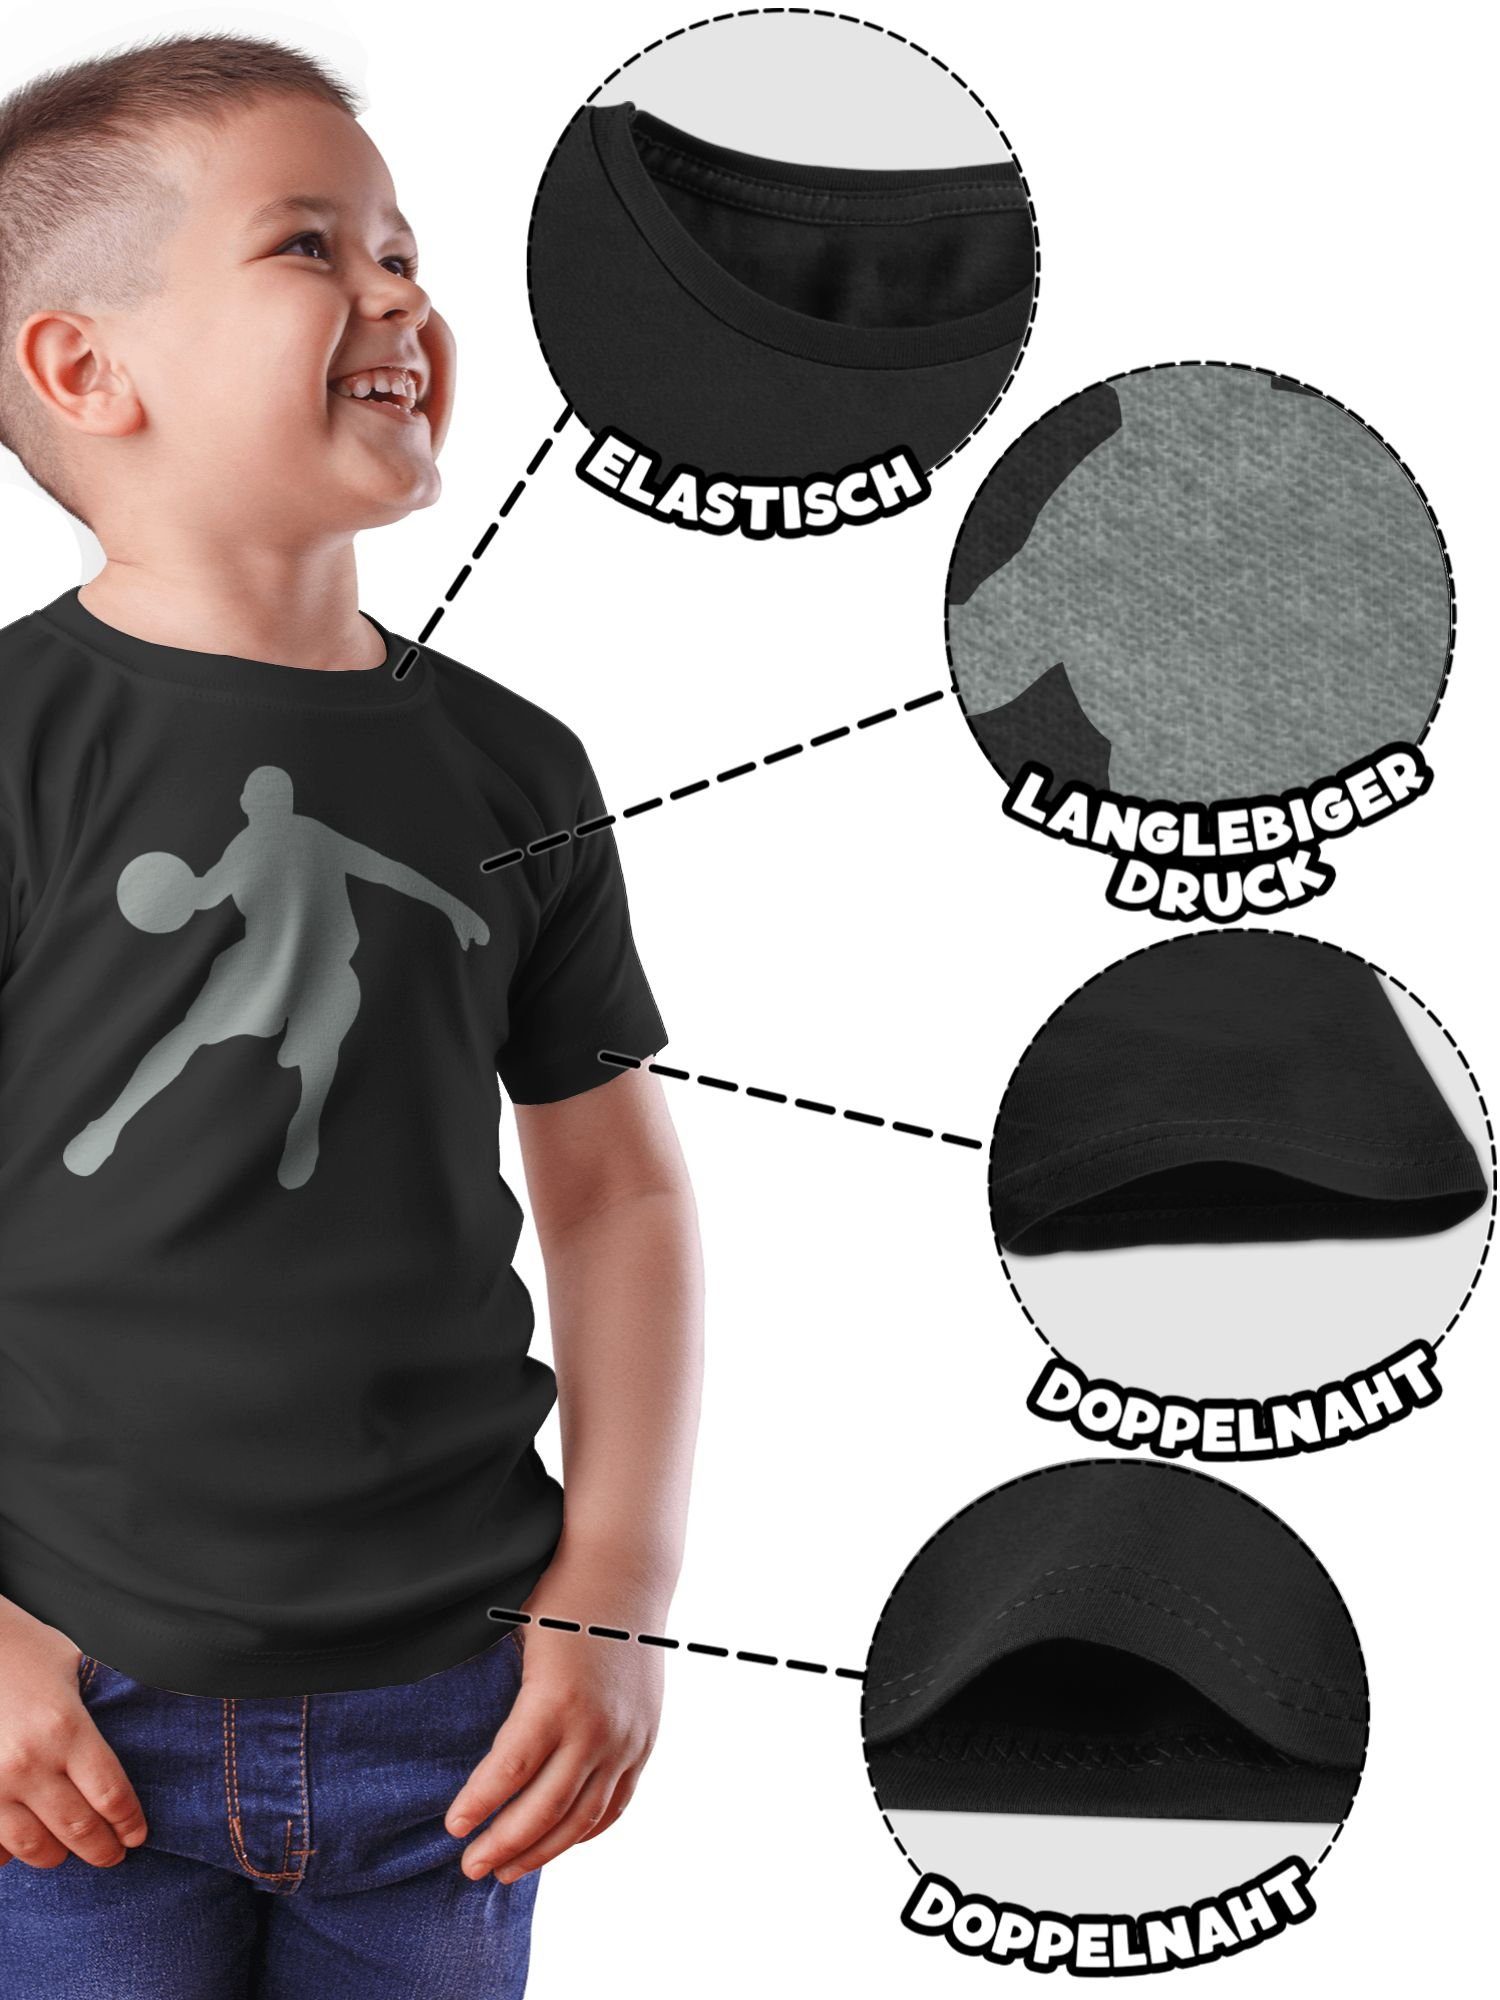 Sport Kinder Schwarz Kleidung Basketballspieler Shirtracer 01 T-Shirt